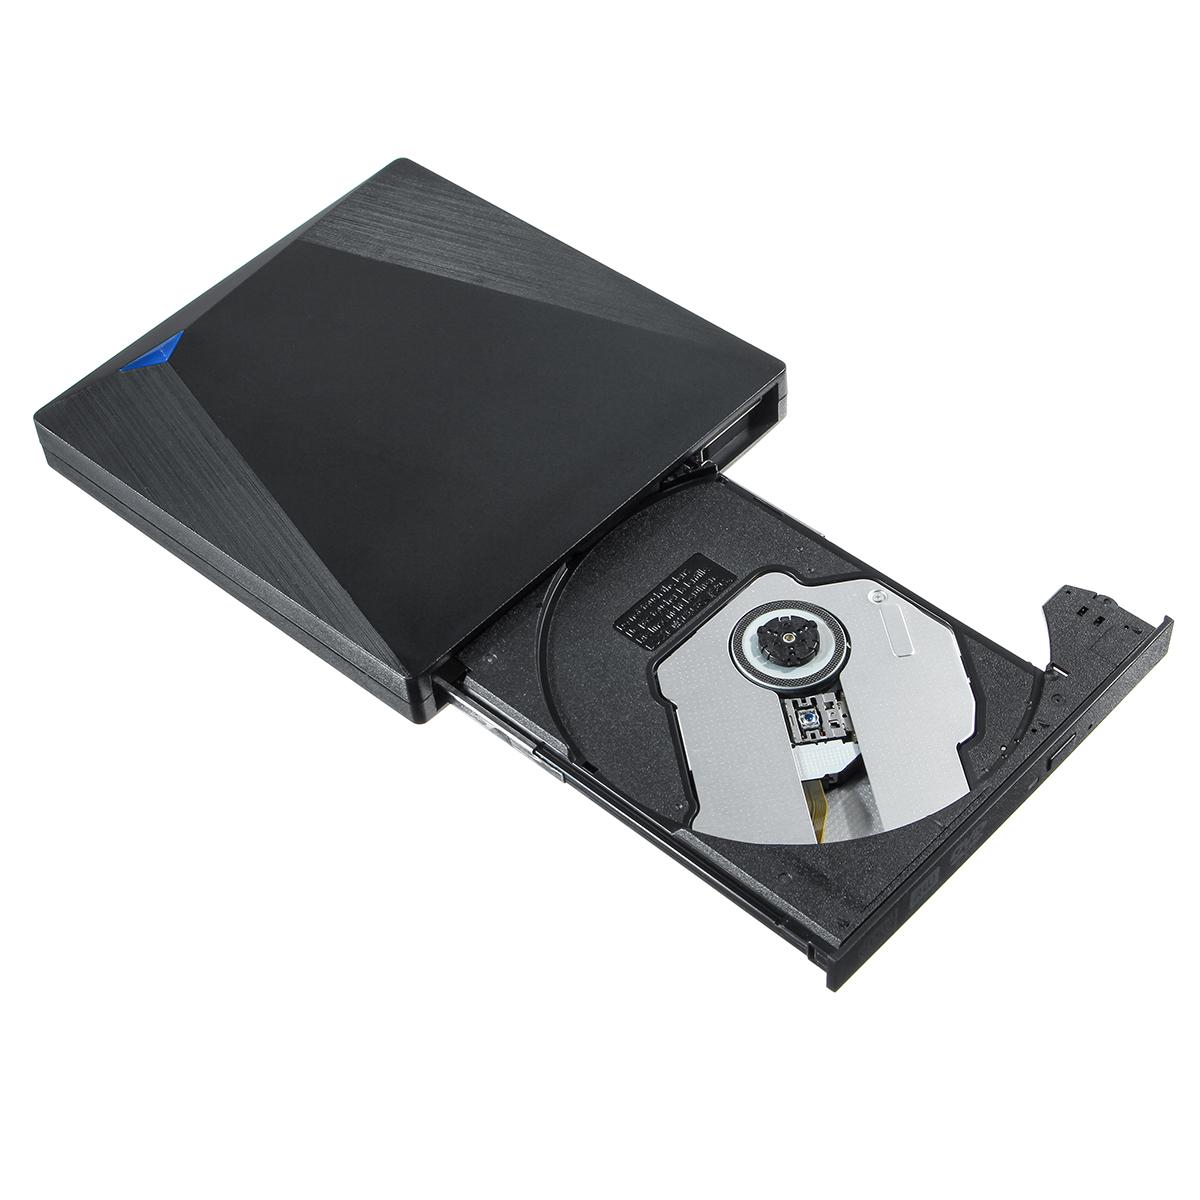 Type-C-USB-30-External-DVD-Burner-Writer-Recorder-Player-DVD-RW-Optical-Drive-CDDVD-ROM-Player-for-L-1710613-9